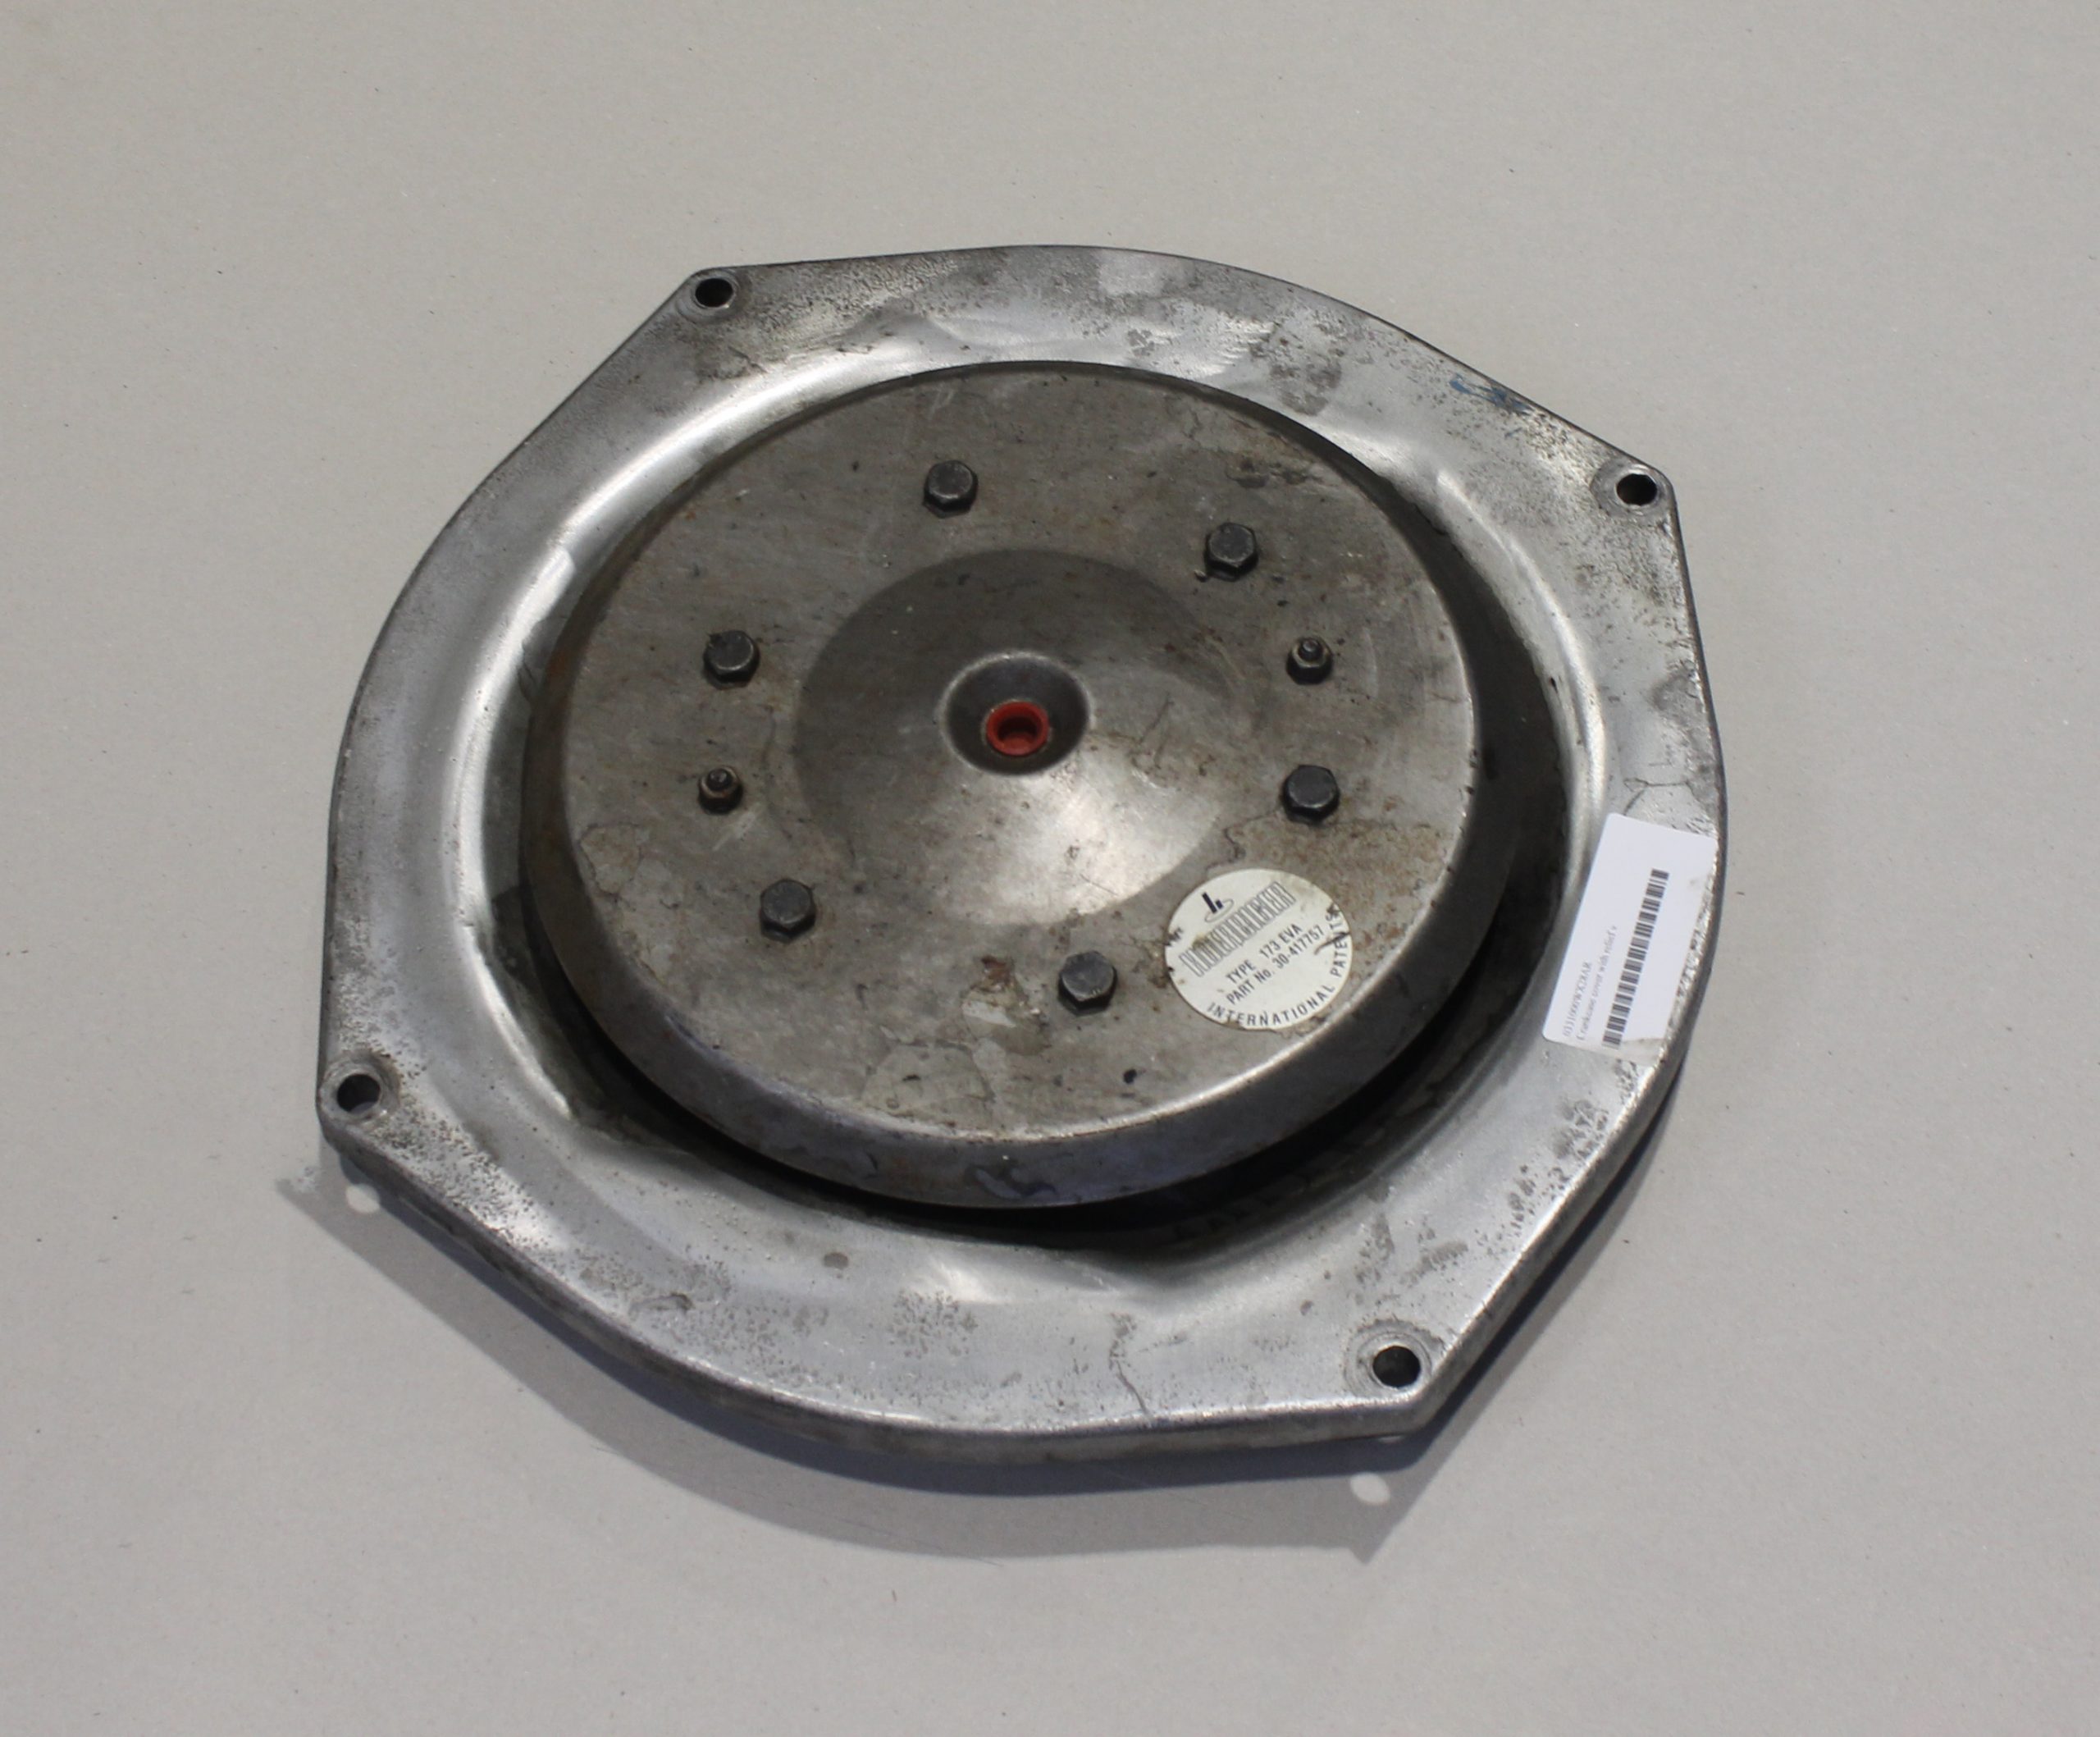 Crankcase cover with relief valve